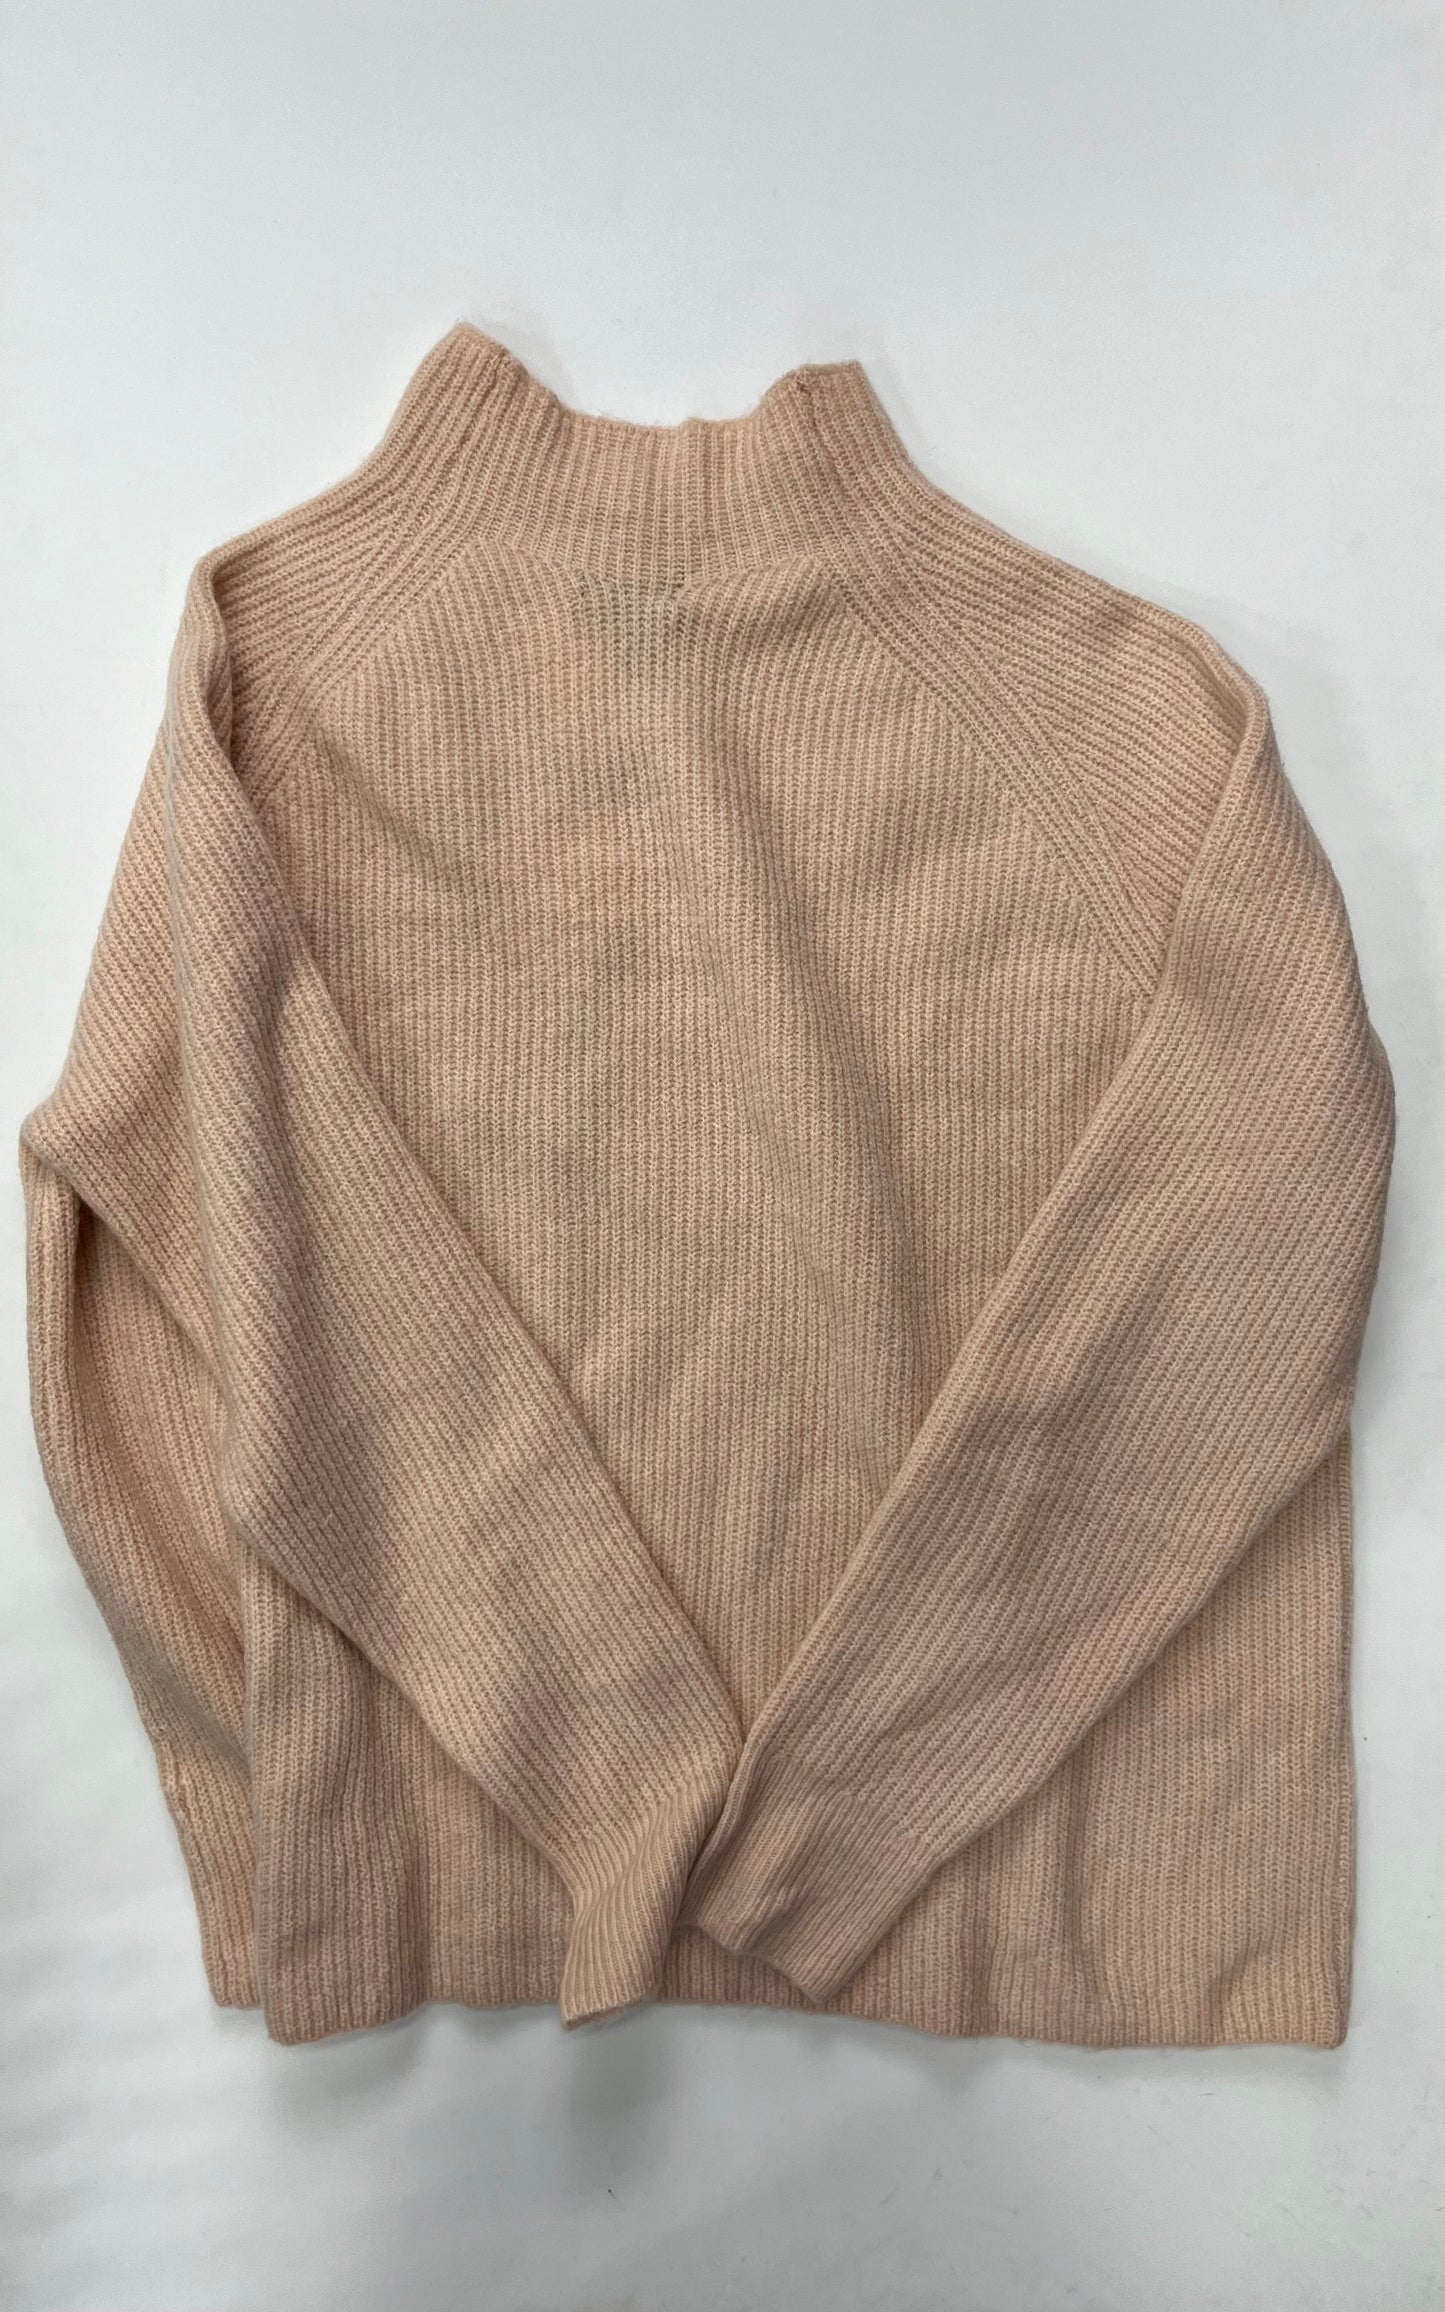 Sweater By Halogen  Size: Xl